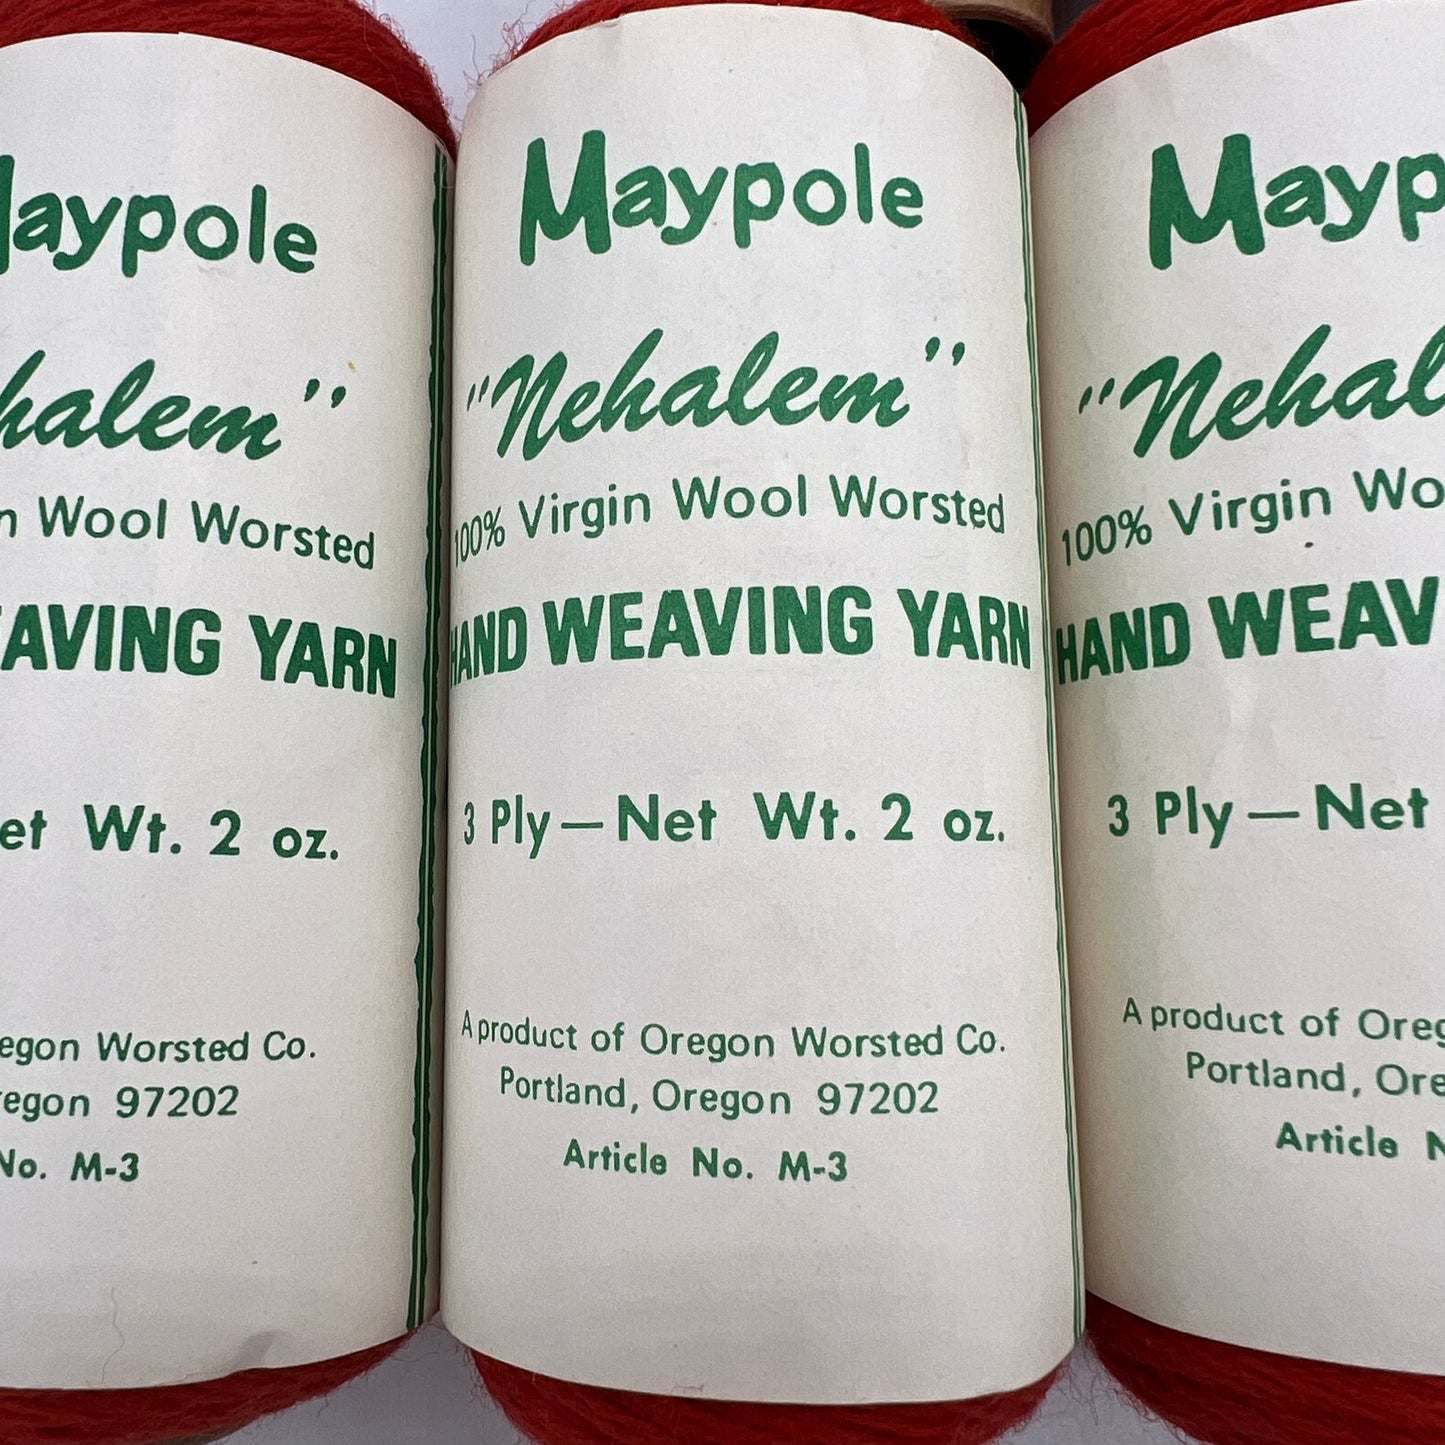 Maypole Nehalem Red Yarn